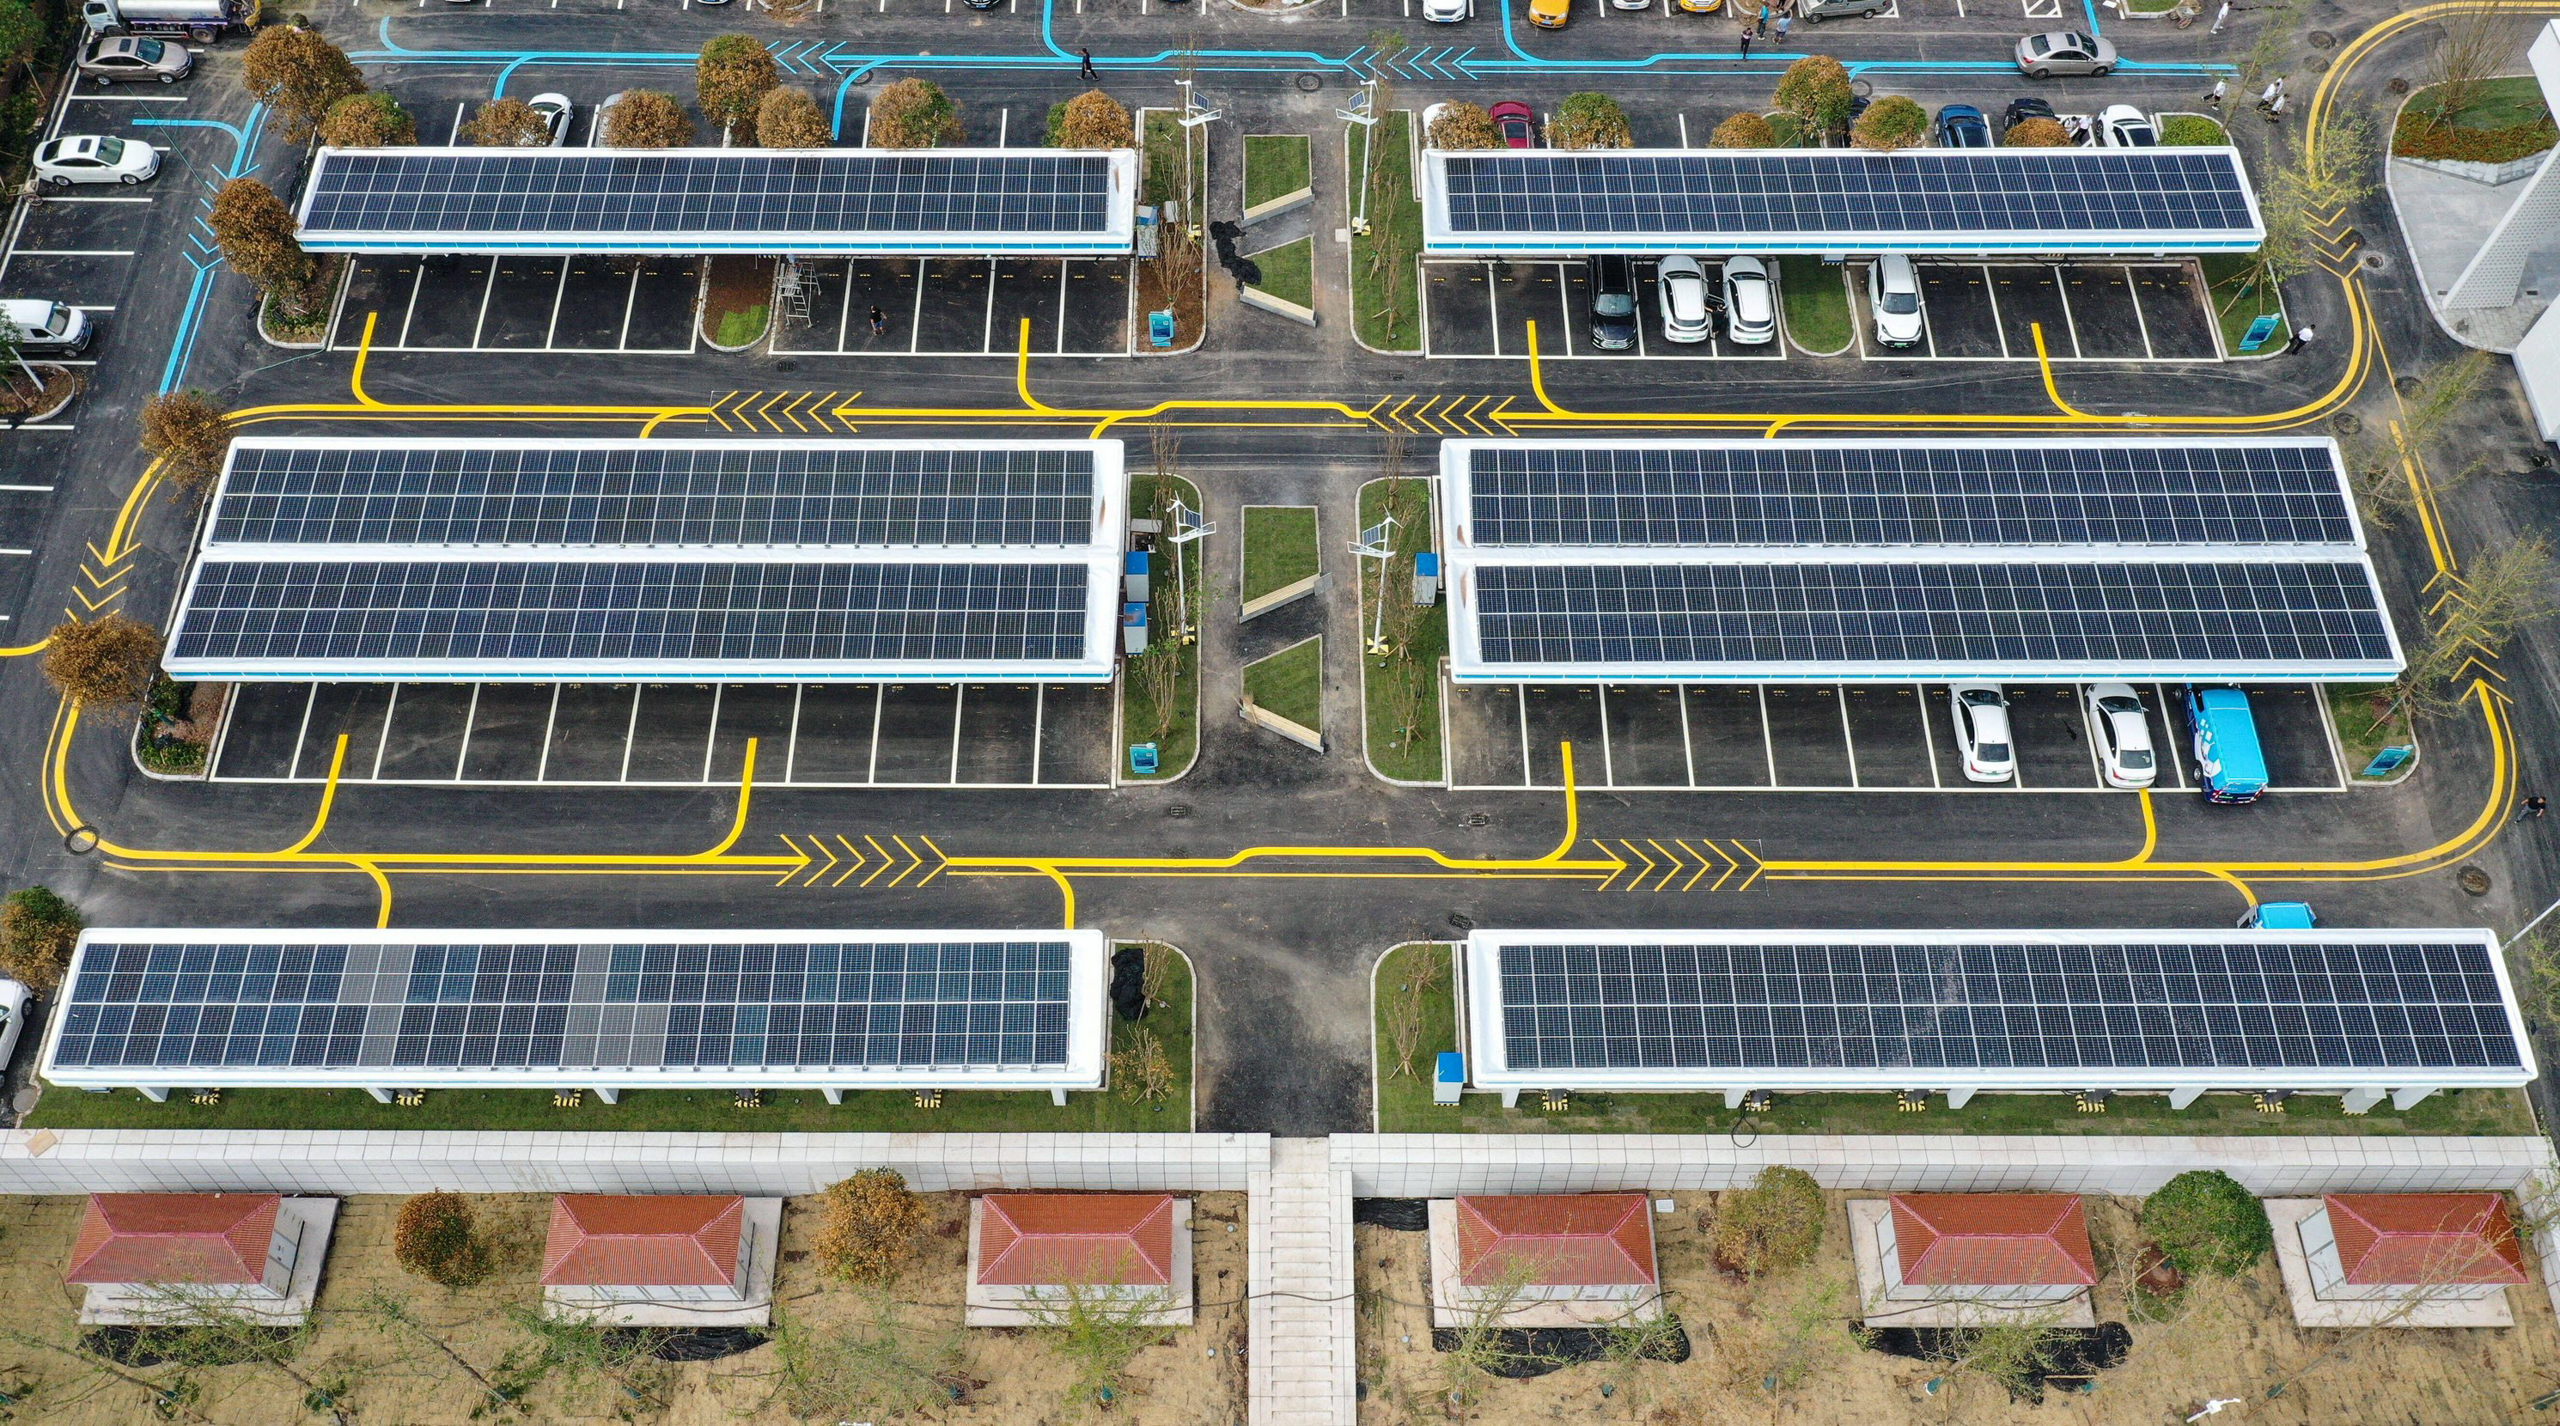 <p>四川宜宾市的一个新能源汽车太阳能充电站。通过反向充电，这些车辆拥有削峰填谷和消纳可再生能源发电的巨大潜力。 图片来源： Wang Xi / Alamy</p>